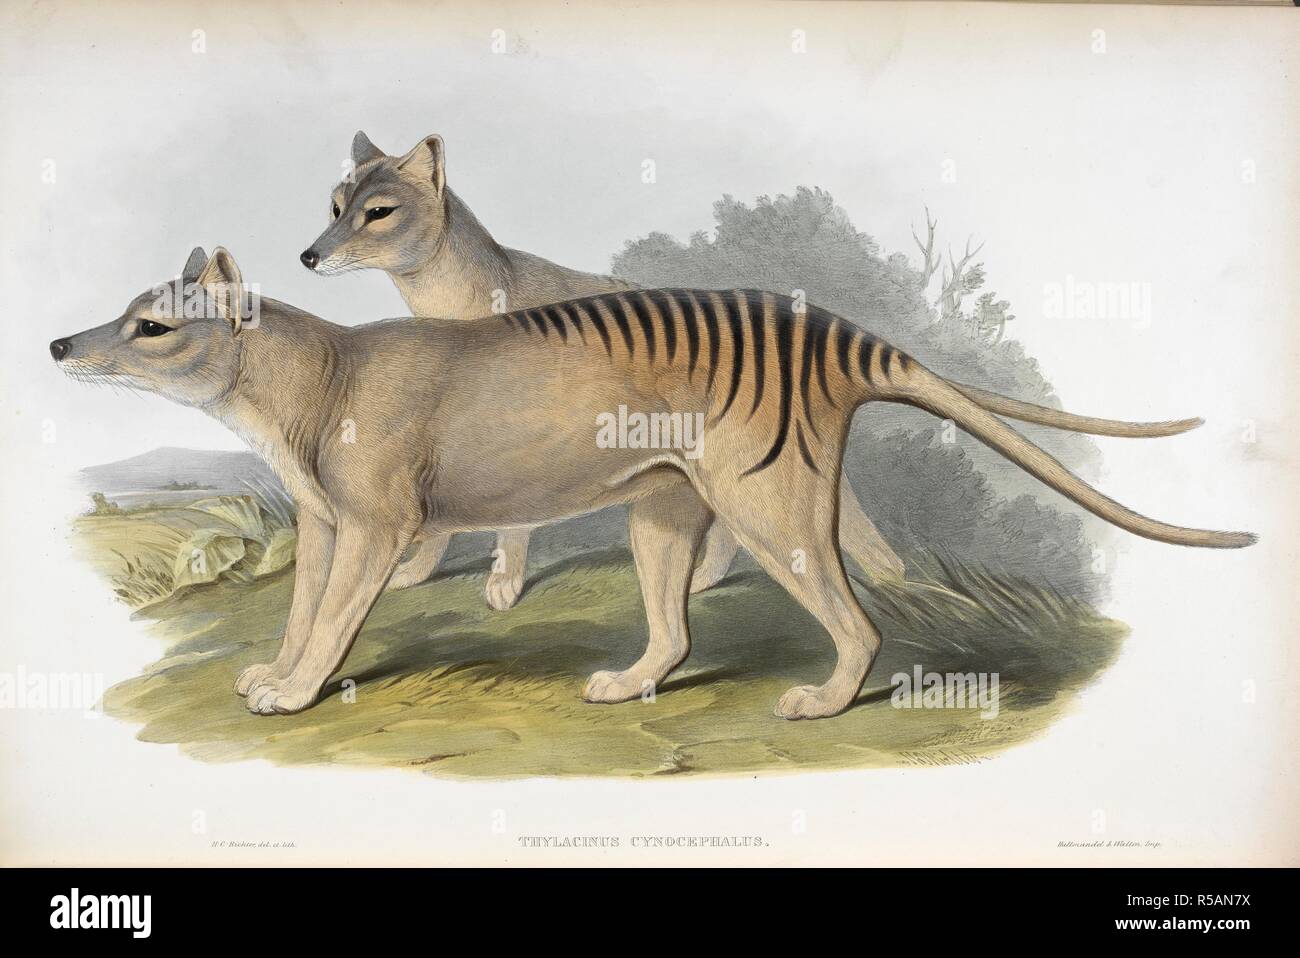 Thylacinus Cynolephalus, Gould.  Common name: Tasmanian wolf, also known as Thylacine.   Extinct species. The Mammals of Australia. London, 1845-63. Source: 462*.e.4, vol.I, plate 54. Author: GOULD, JOHN. Stock Photo